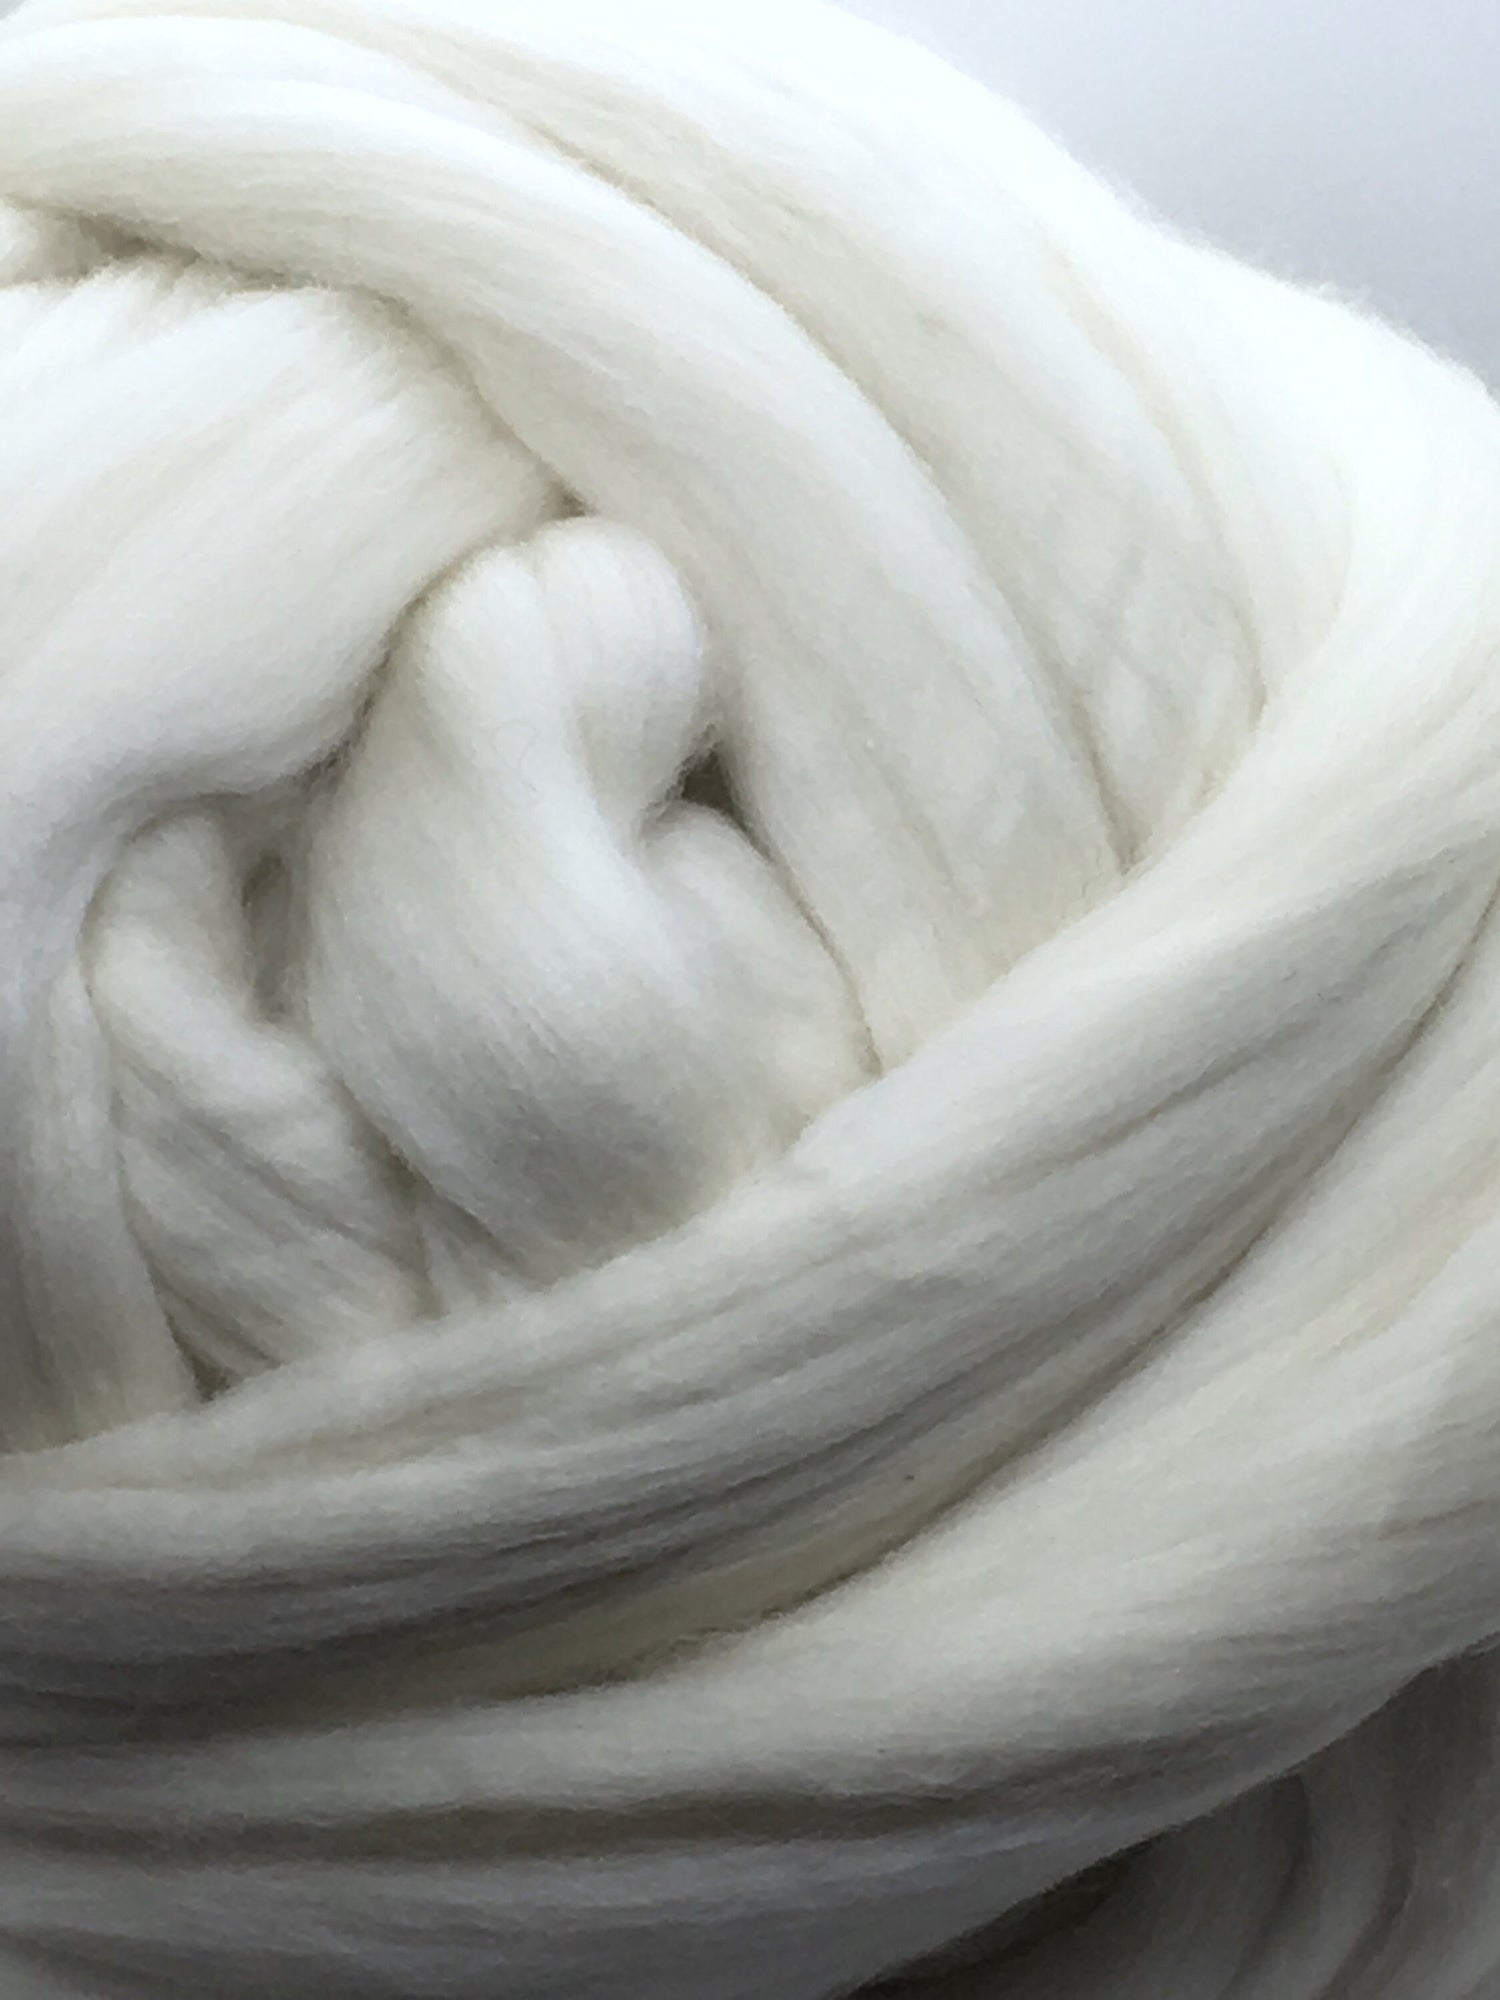 DR1 Winter White Wool Roving